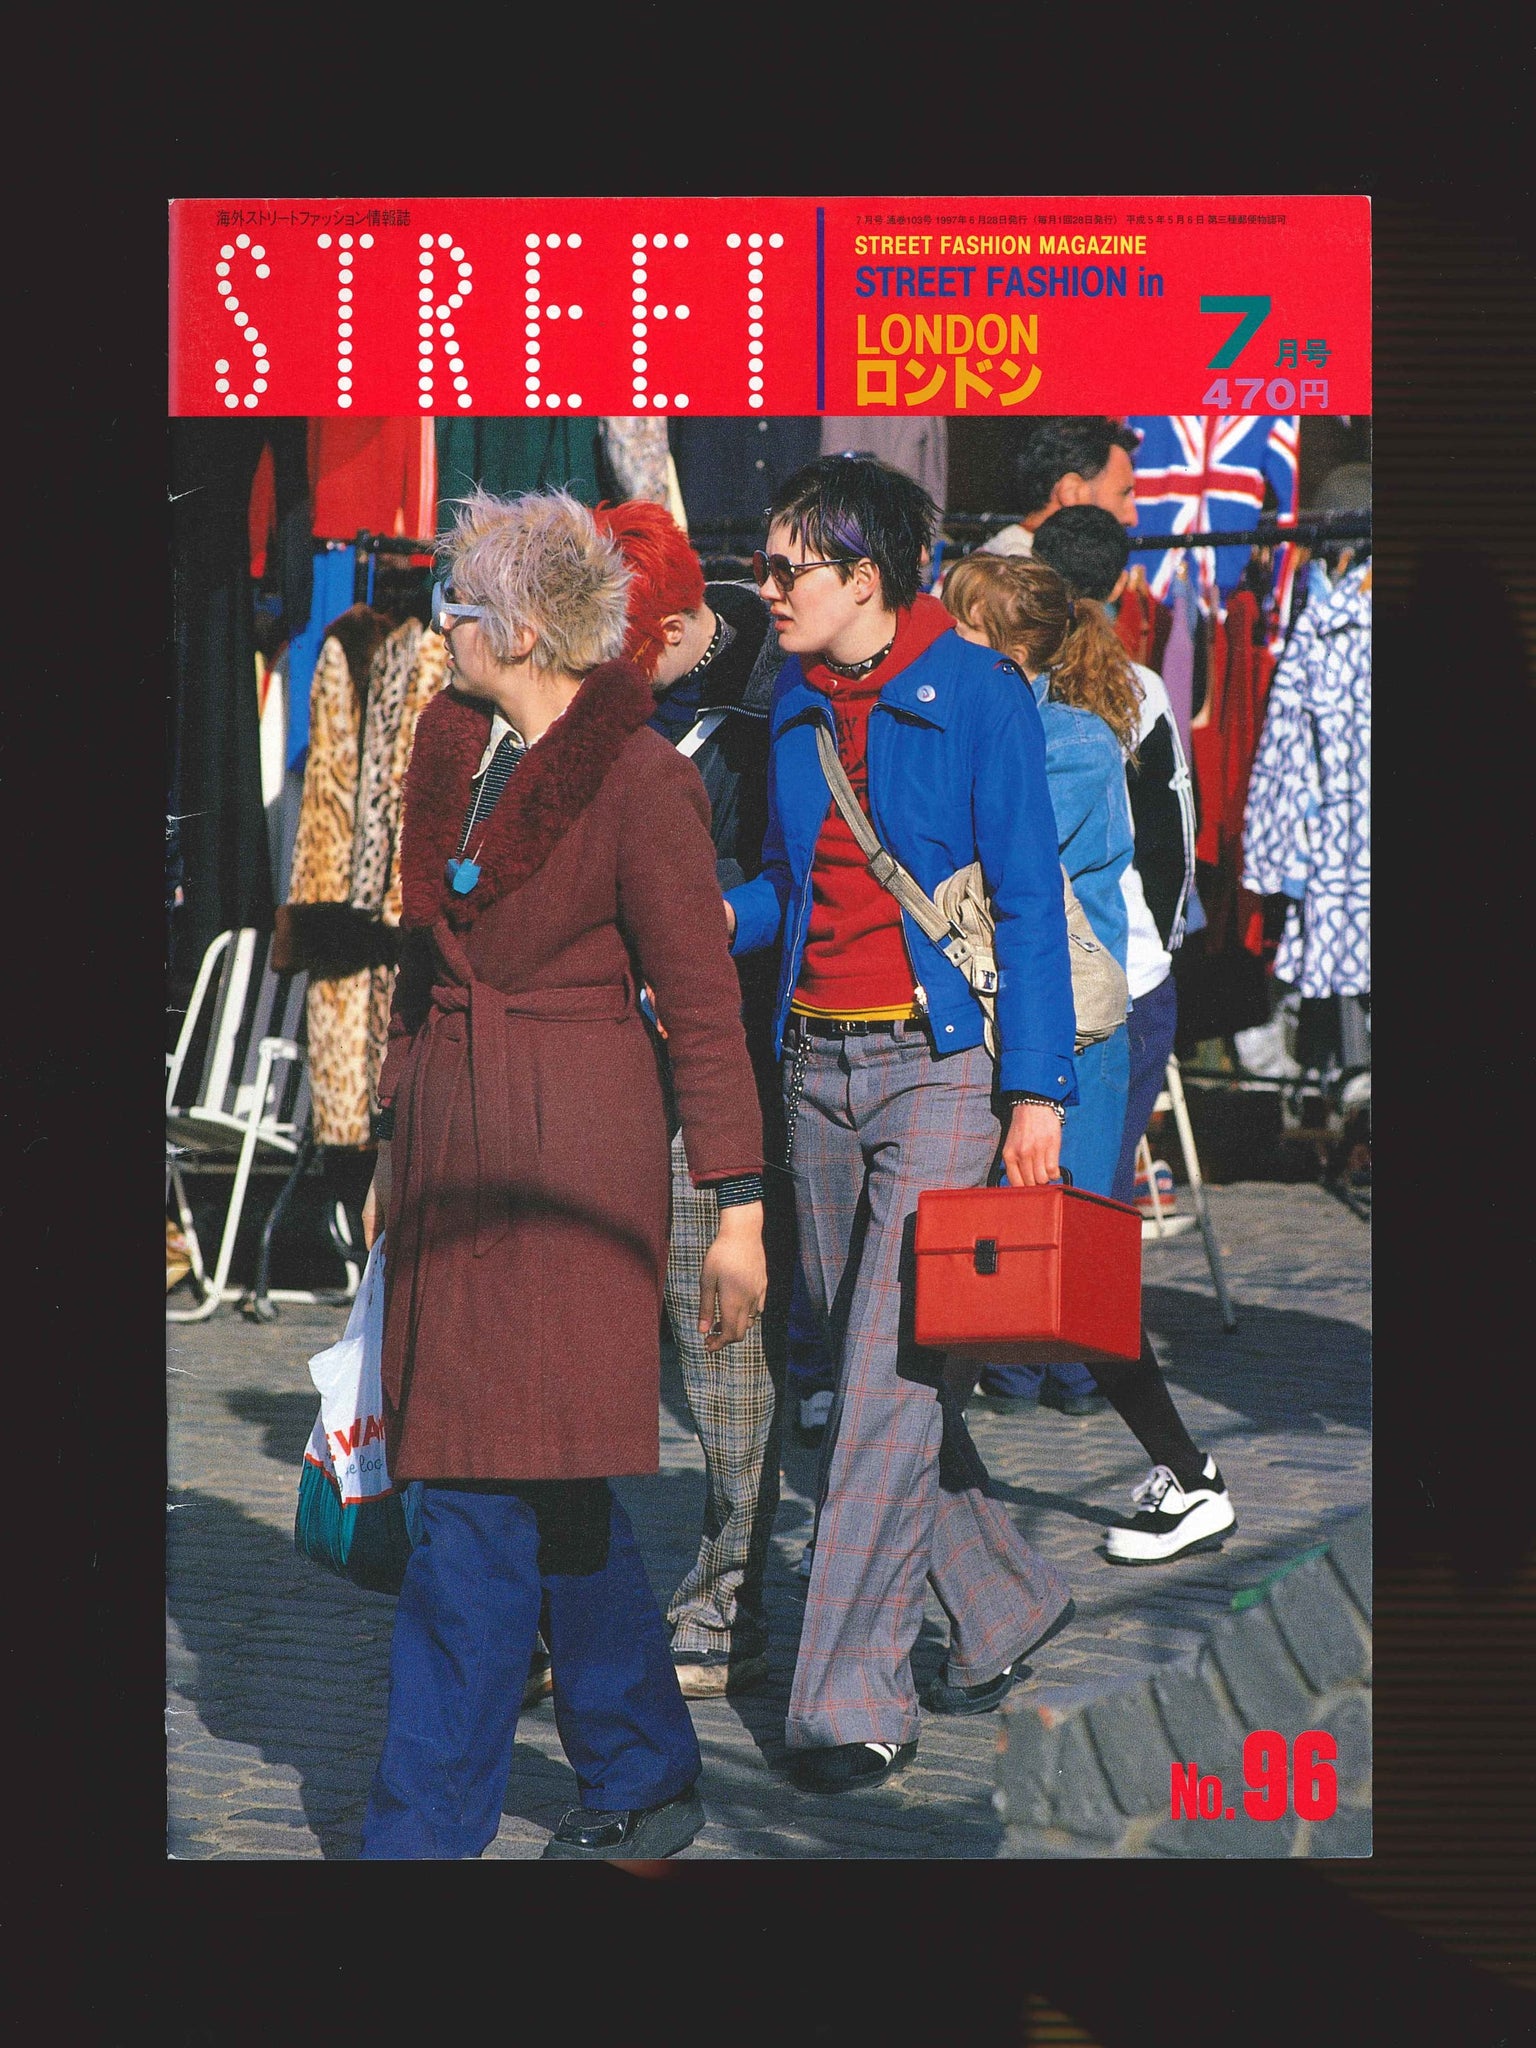 STREET magazine no. 96 / july 1997 / street fashion in london / Shoichi Aoki